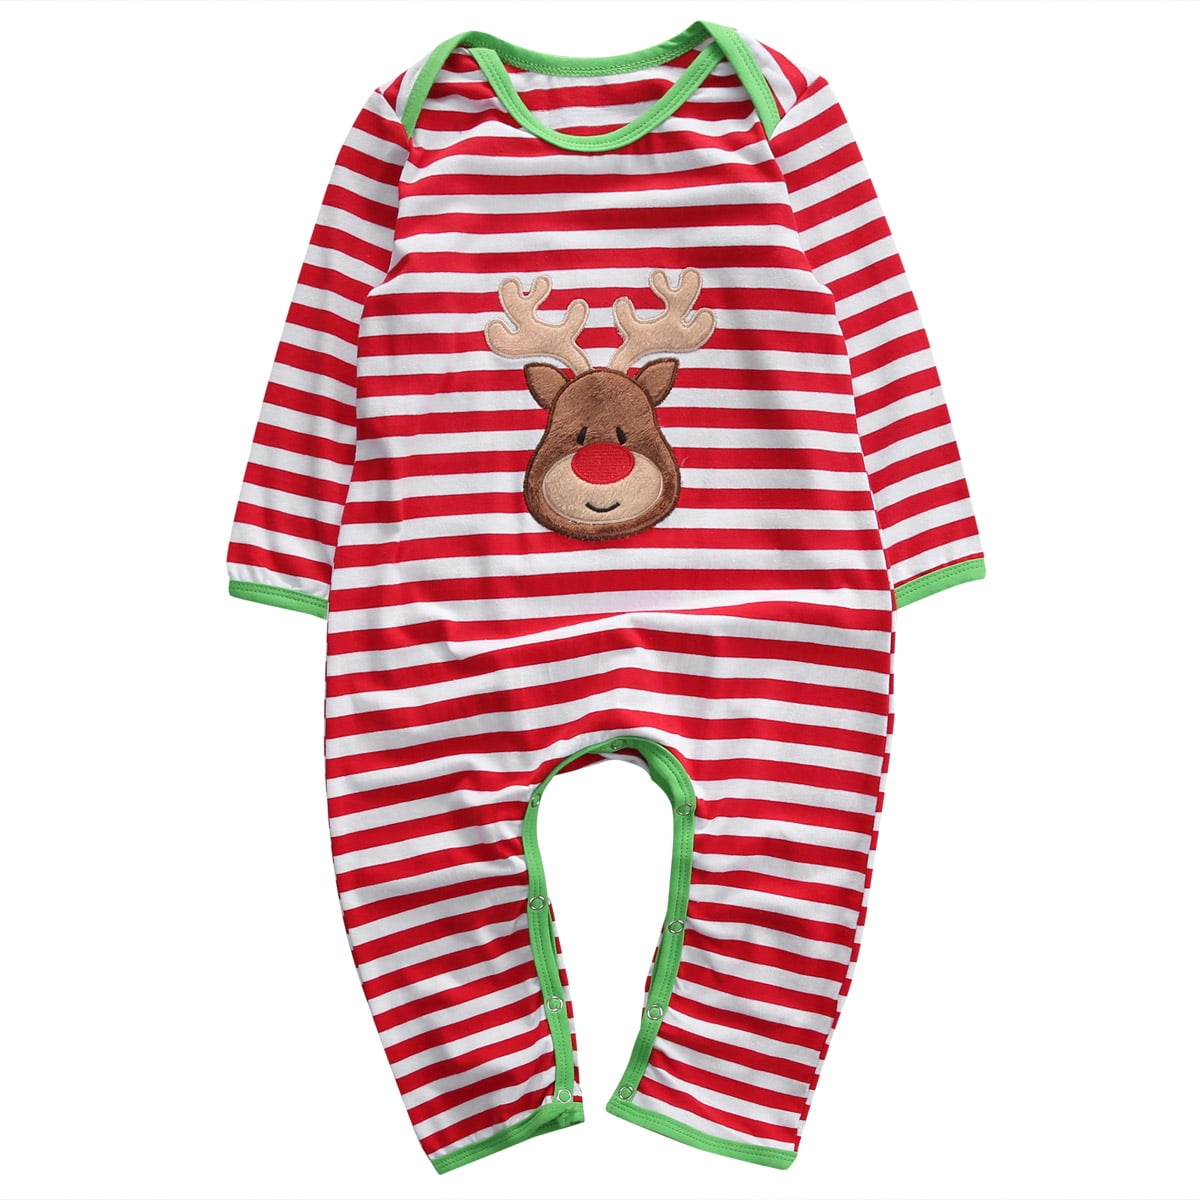 Newborn Infant Baby Boy Girl Kids Stripe Romper Jumpsuit Bodysuit Clothes Outfit 